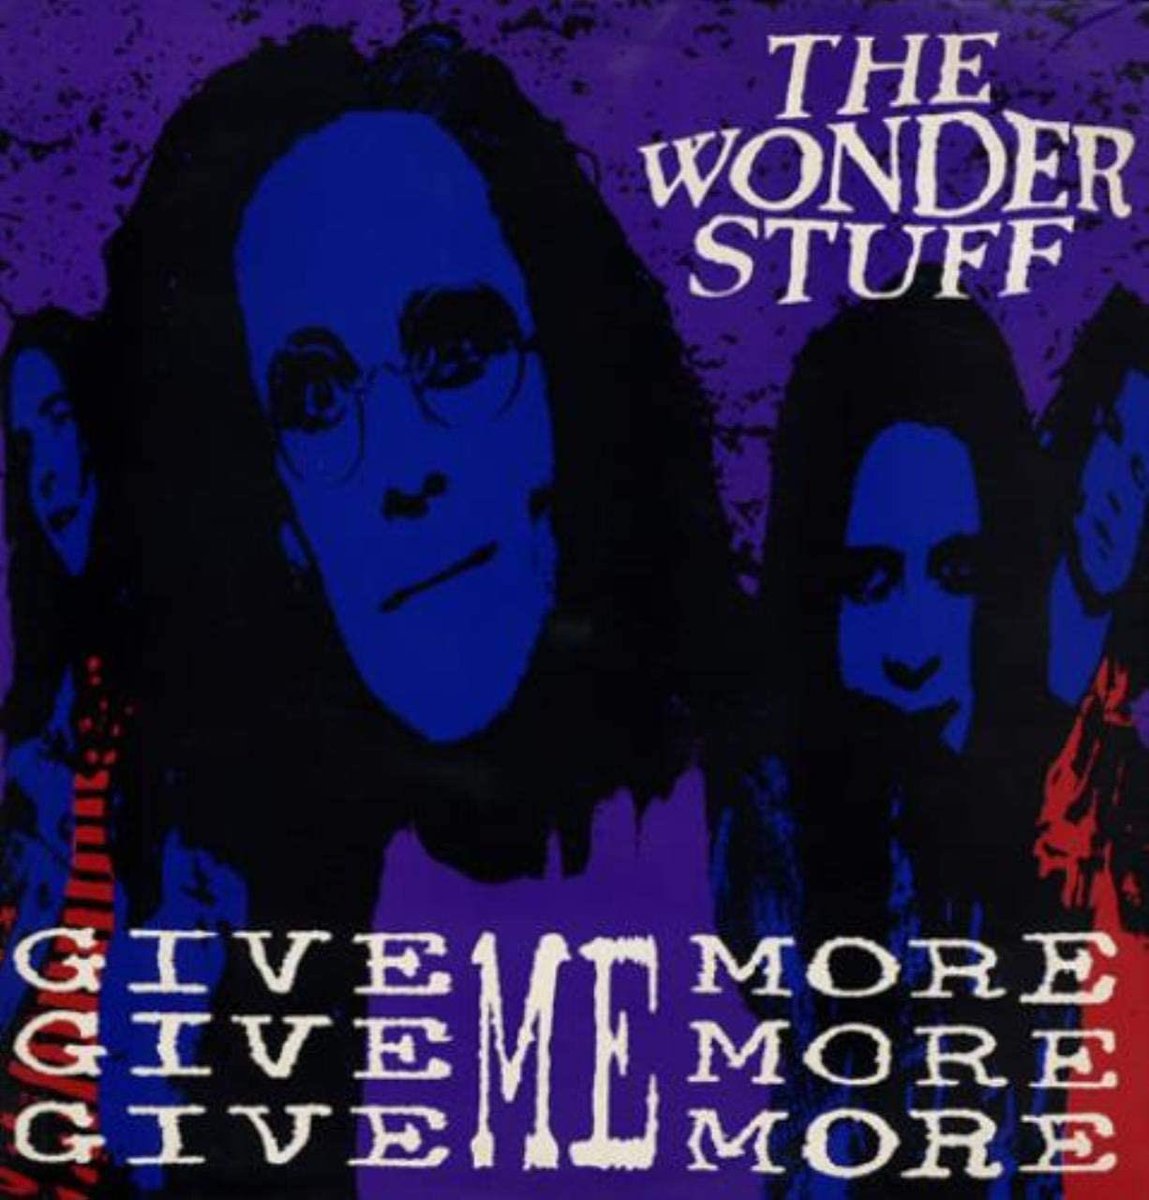 35 years ago today on April 18, 1988, The Wonder Stuff released the single Give Give Give Me More More More. #elvagonalternativo #thewonderstuff #mileshunt @thewonder_stuff @mileshuntTWS #35thanniversary